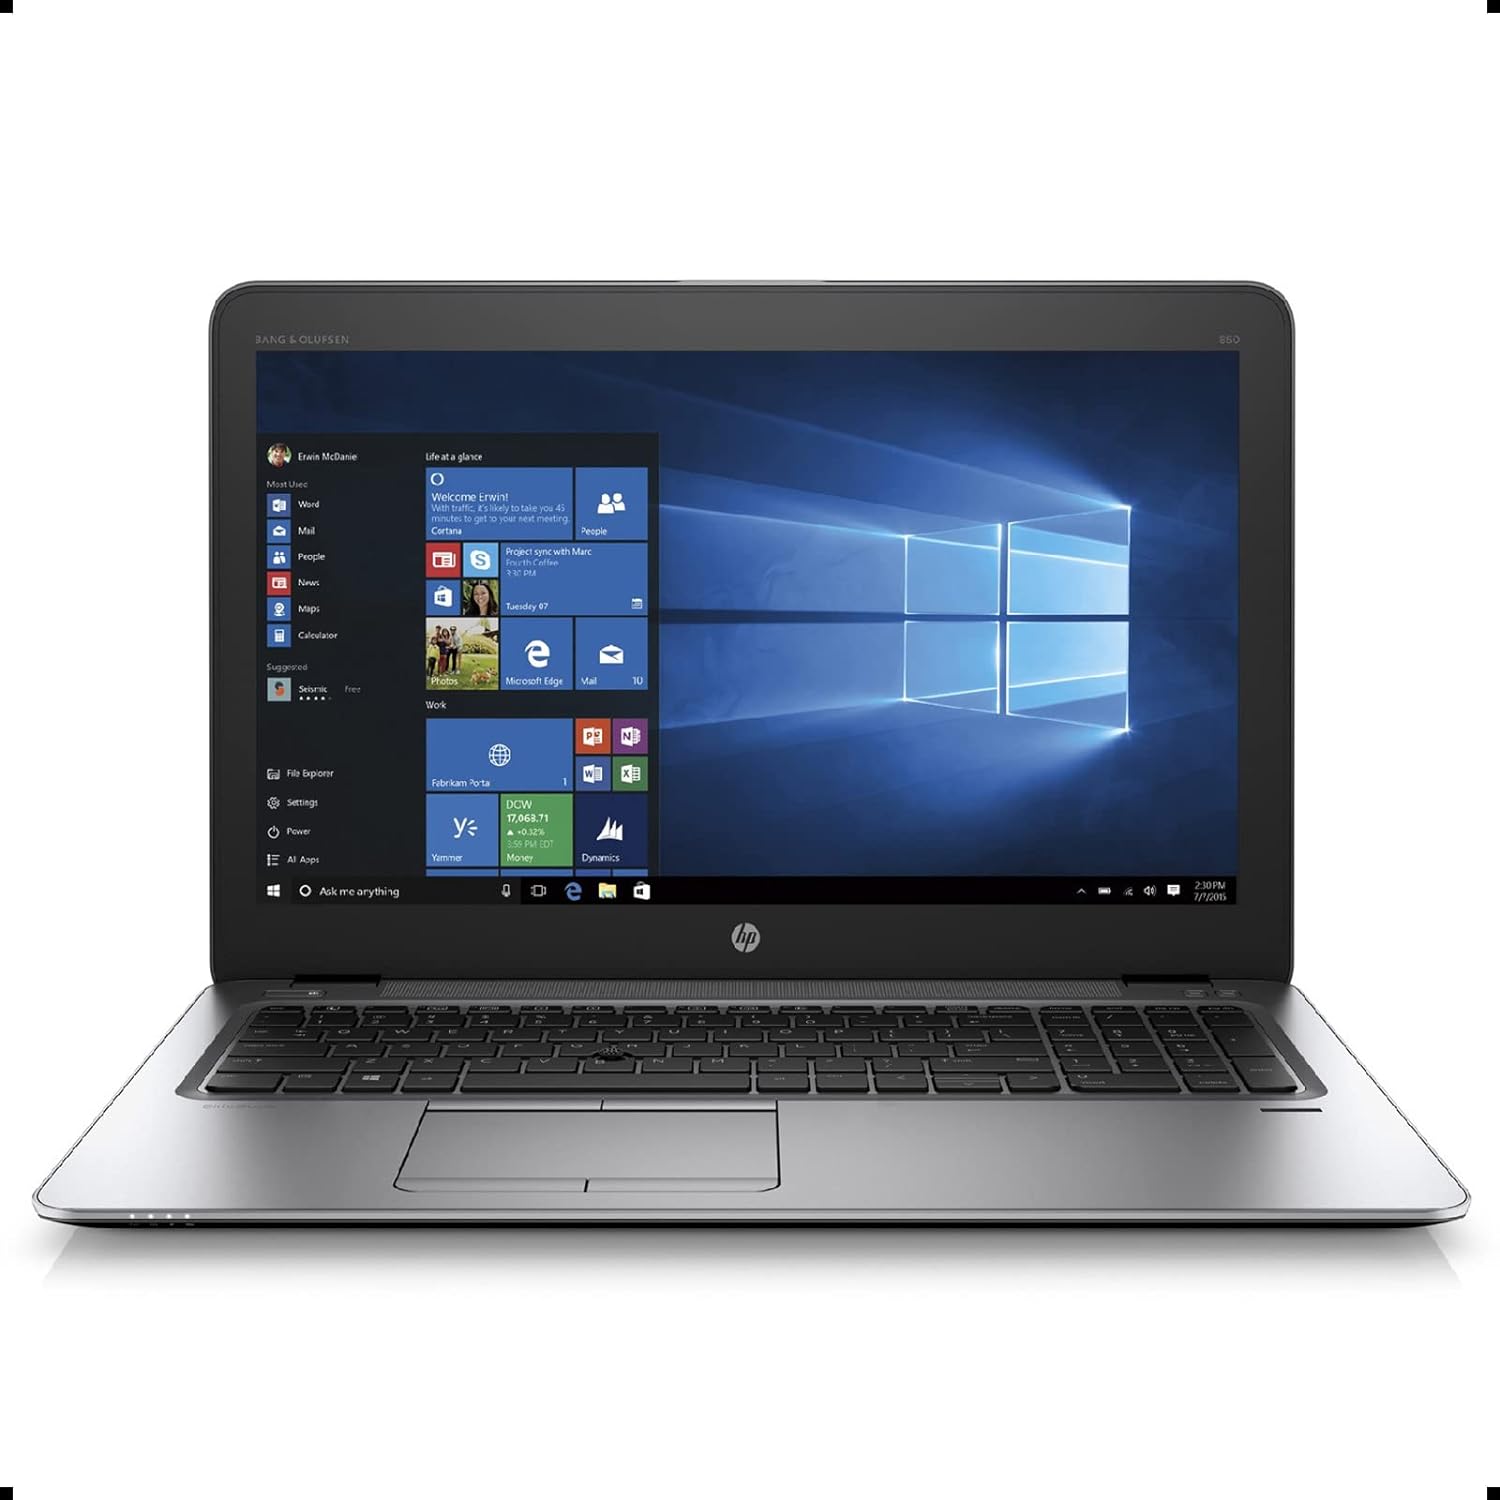 Refurbished HP Probook 850 G3 i7 Laptop 6th Gen, 8GB Ram, 256GB SSD